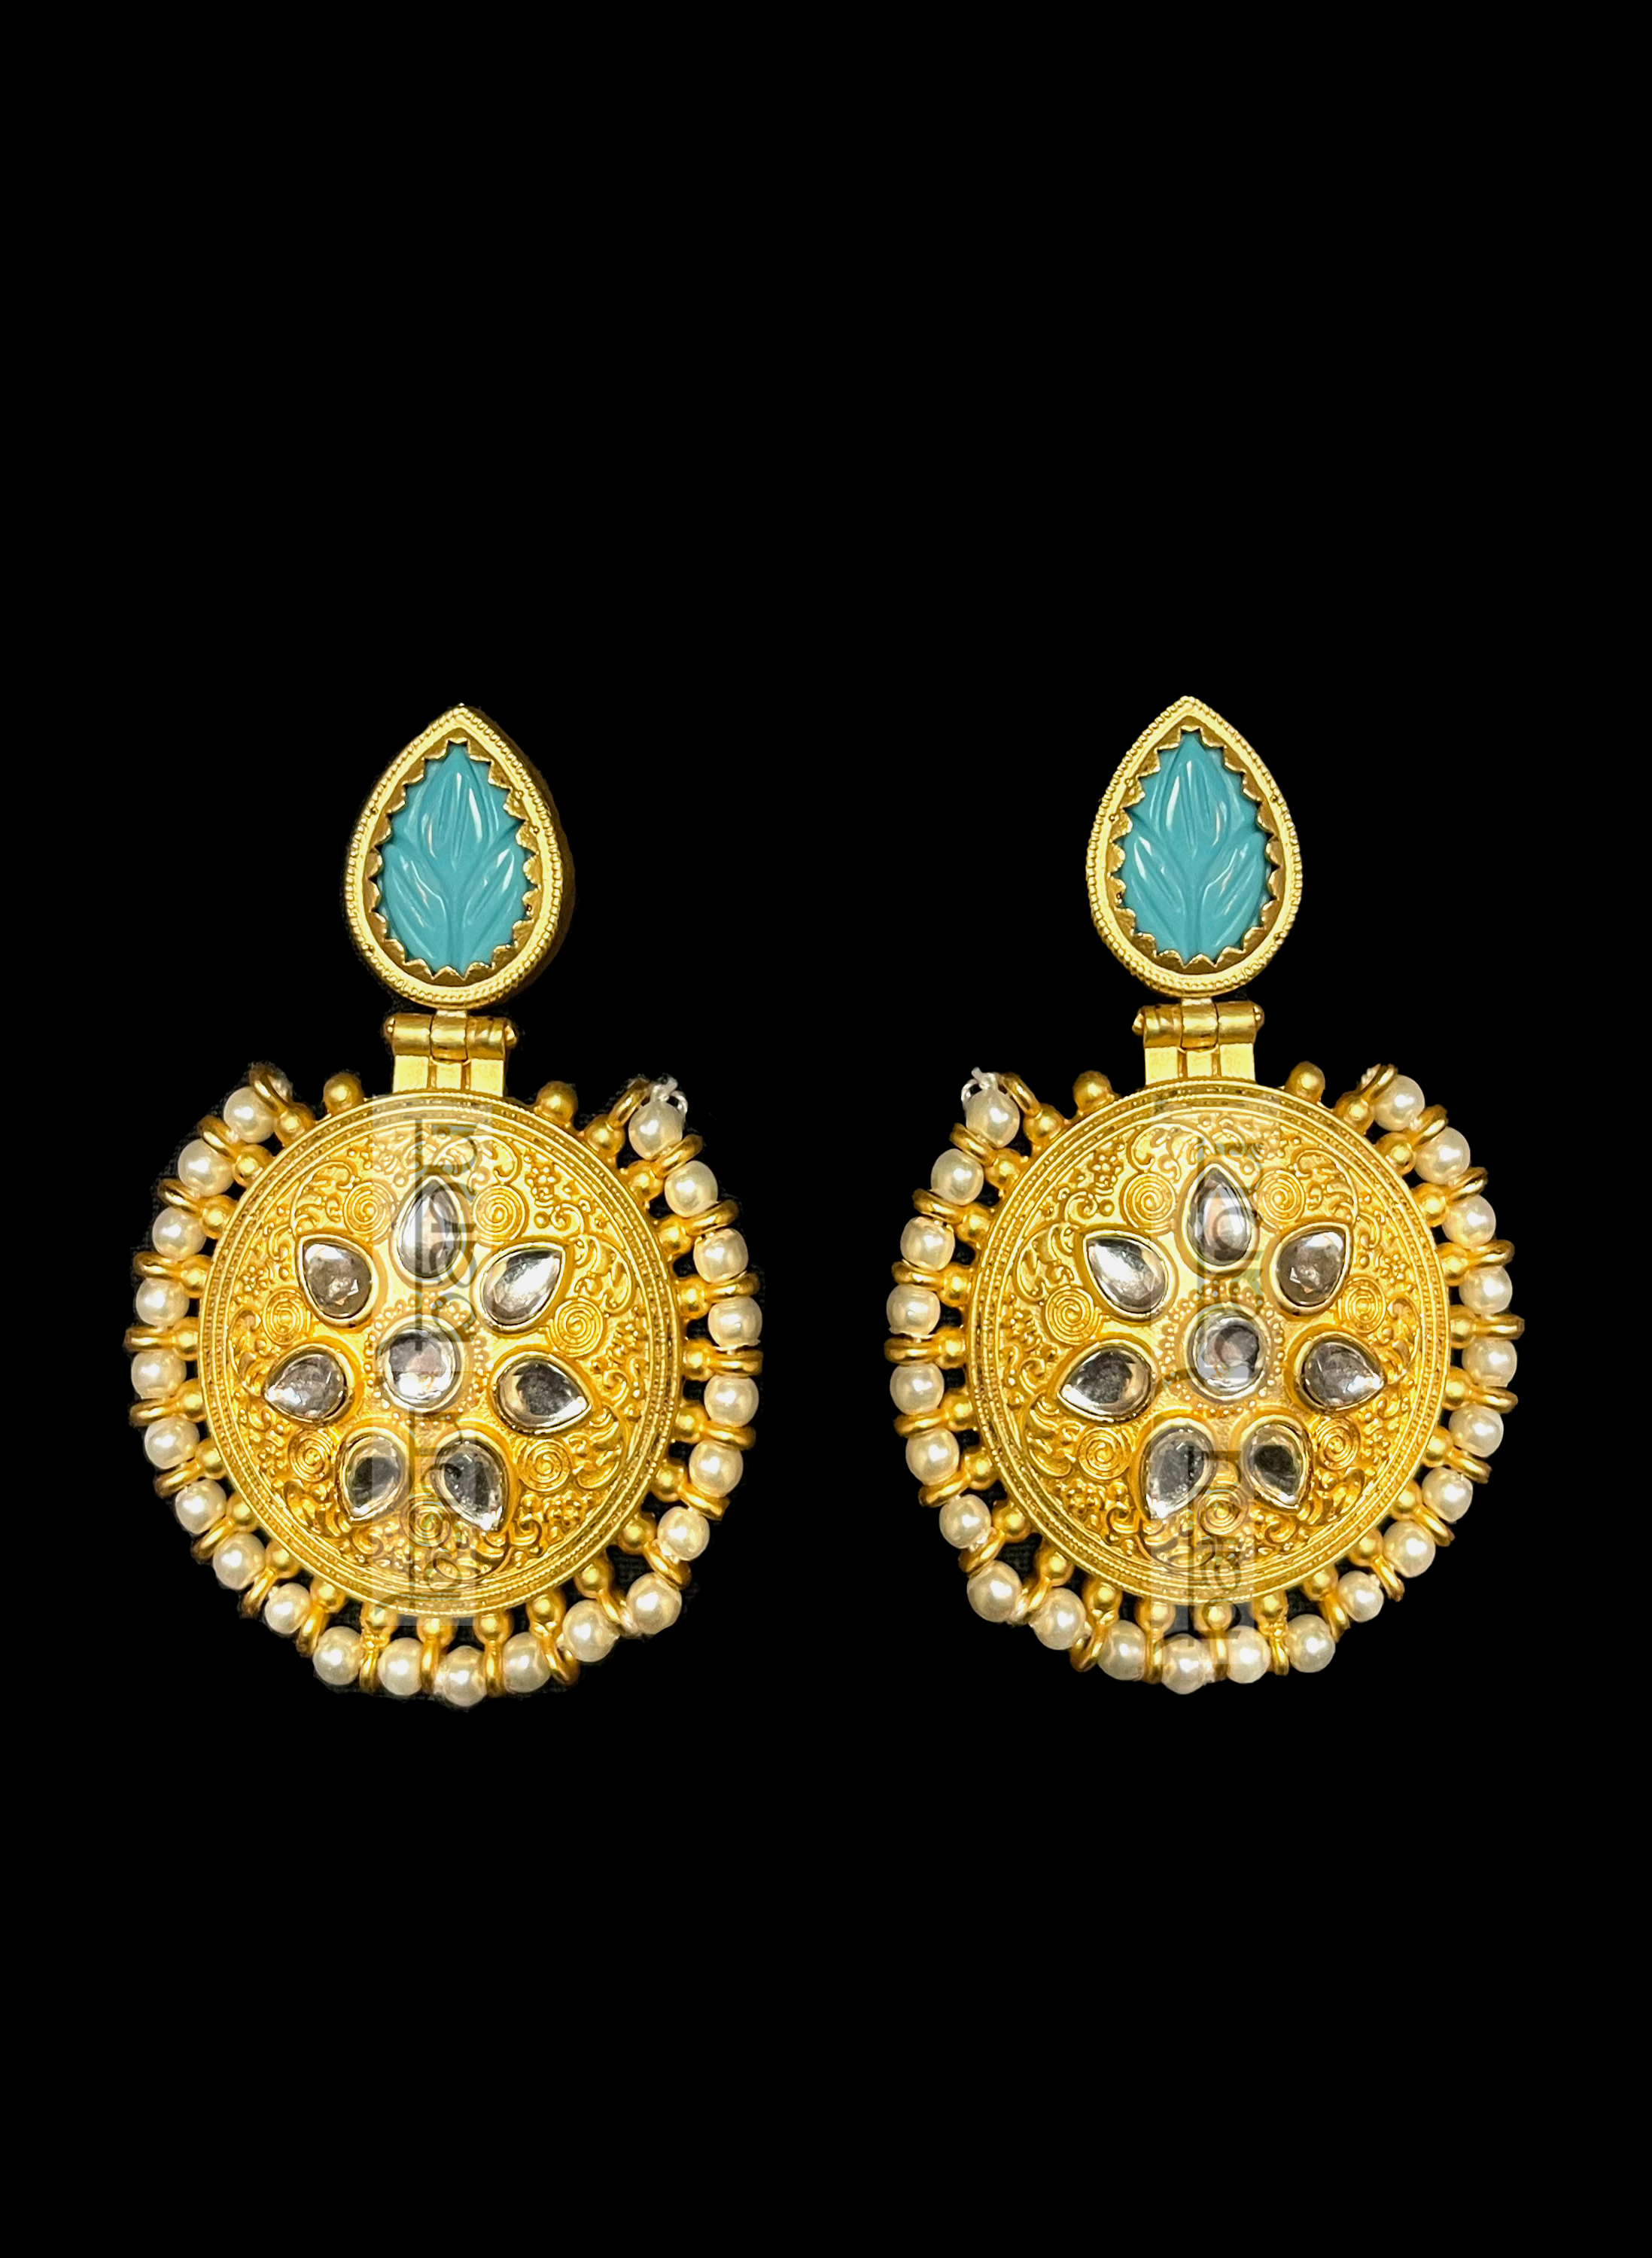 Aqua blue Amrapali earrings with Pearls & Kundan